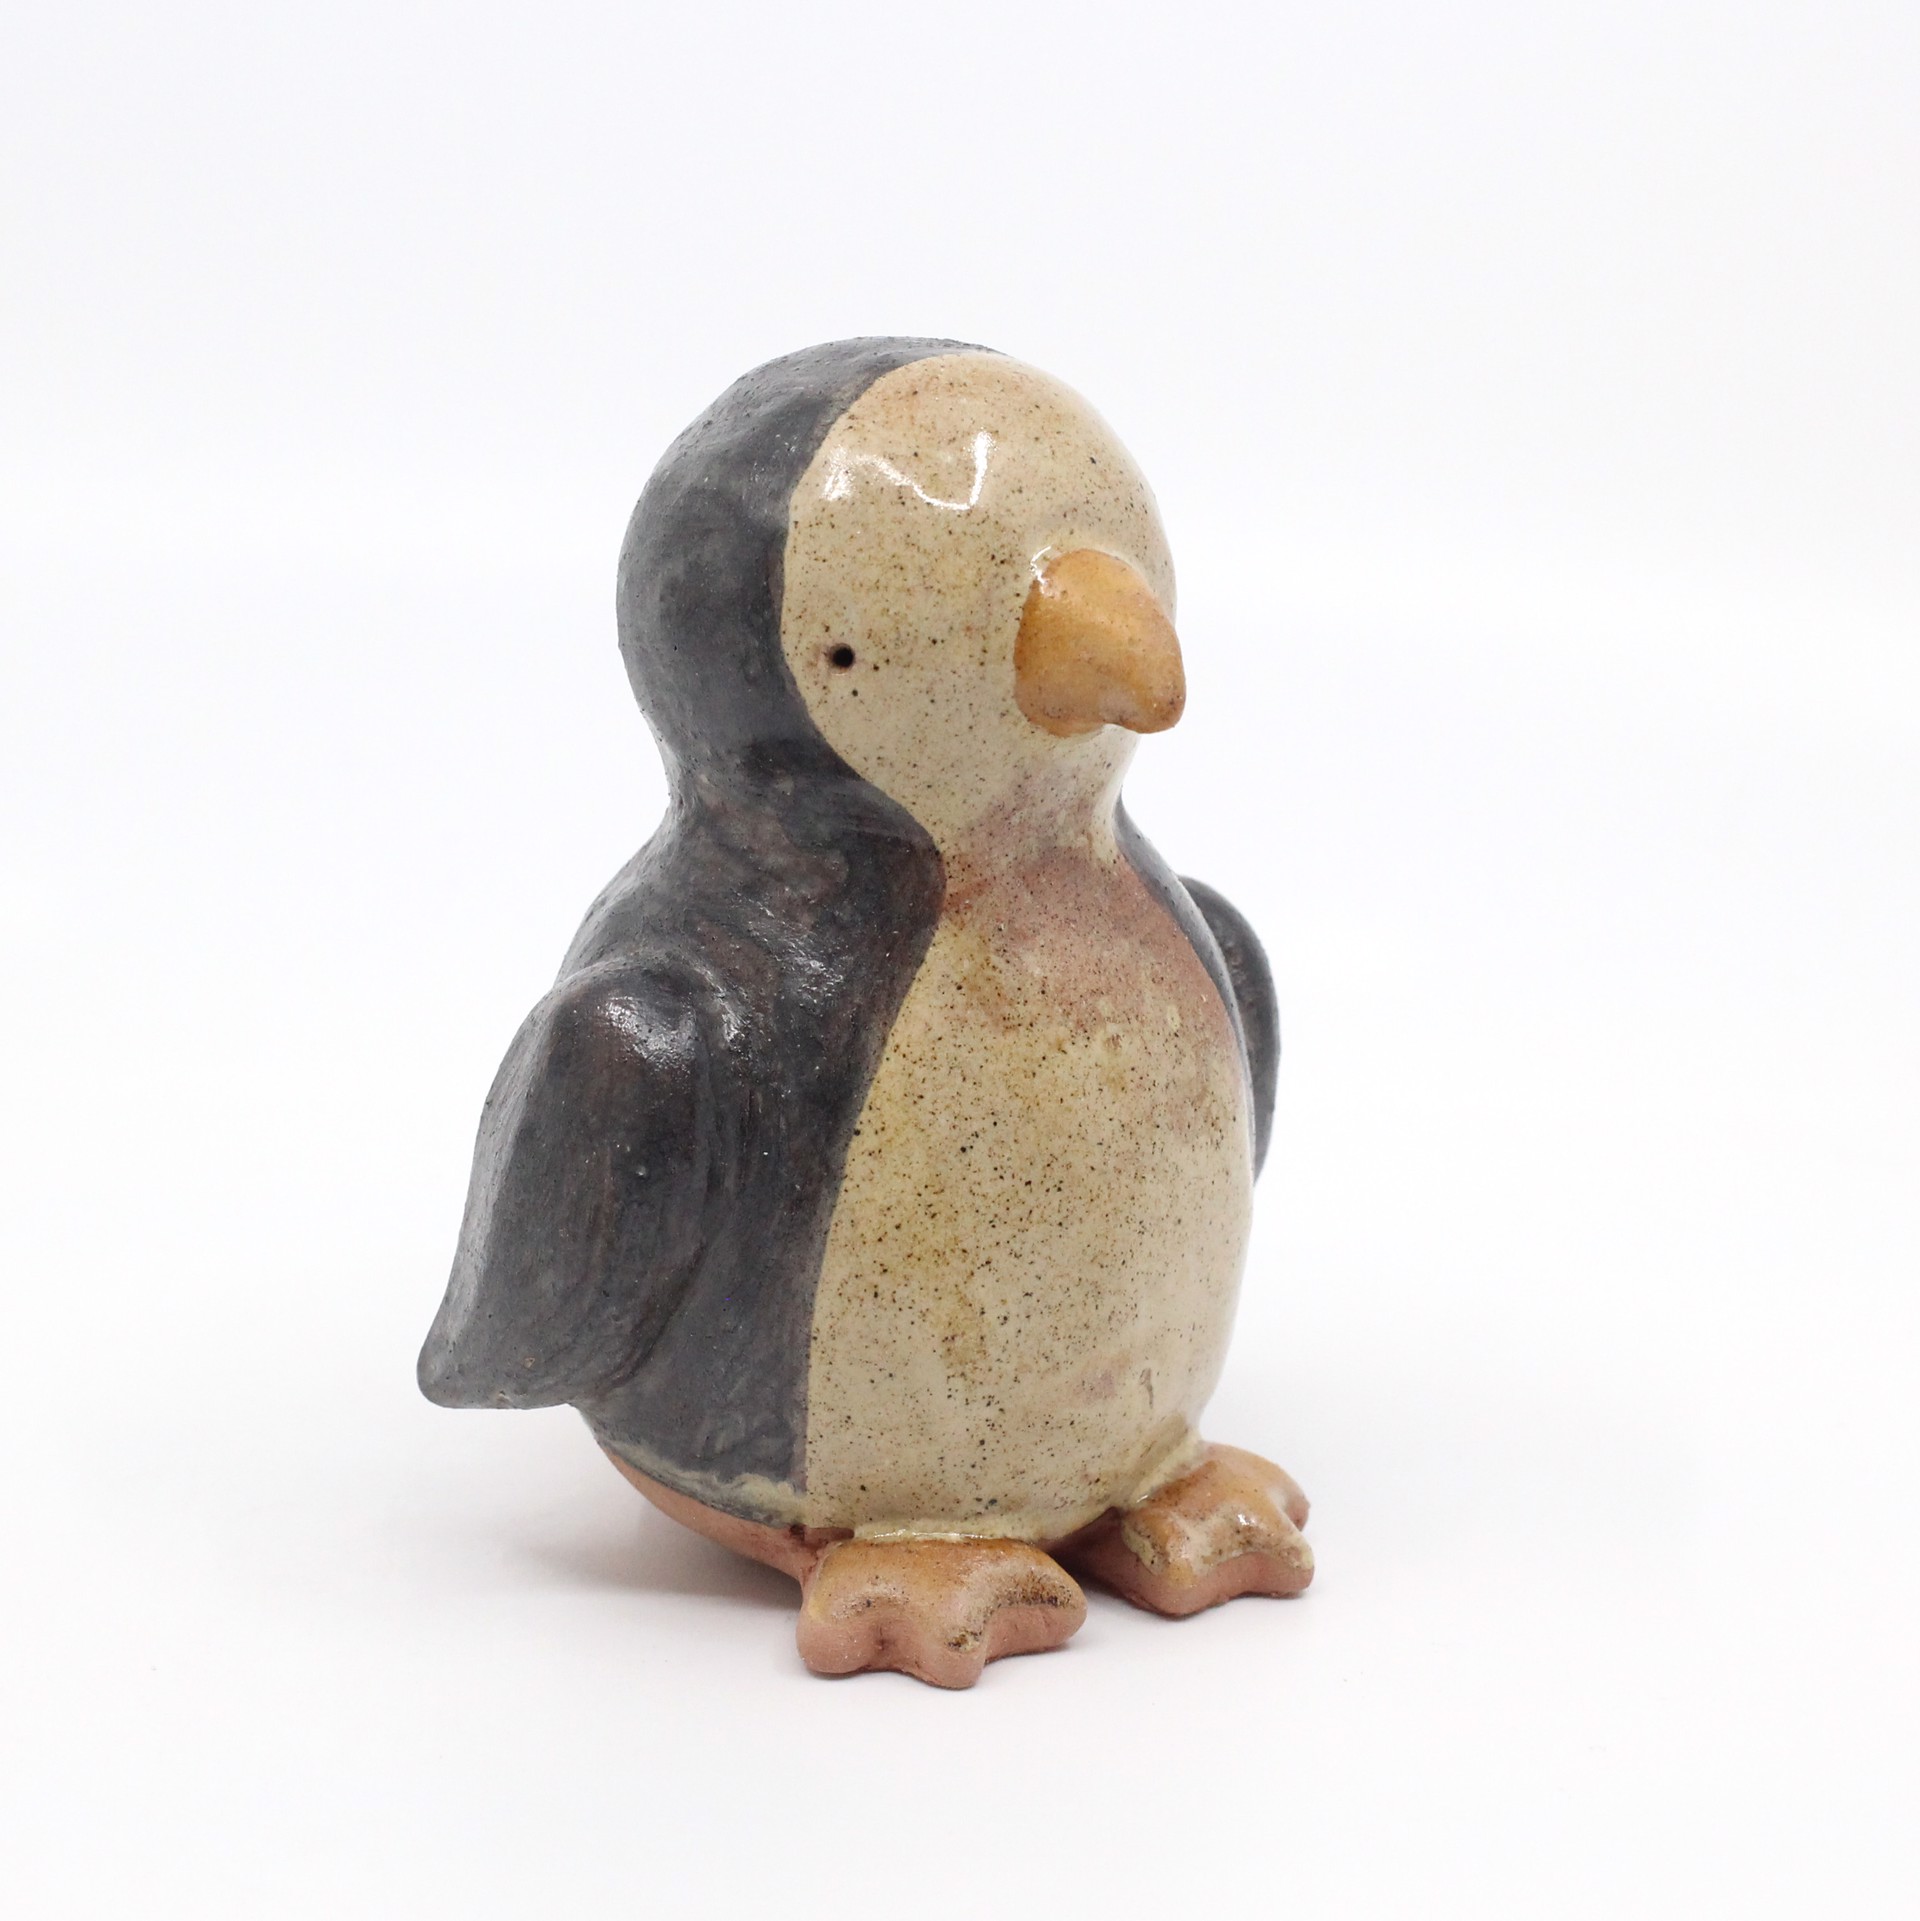 Pingüino I by Iohan Figueroa